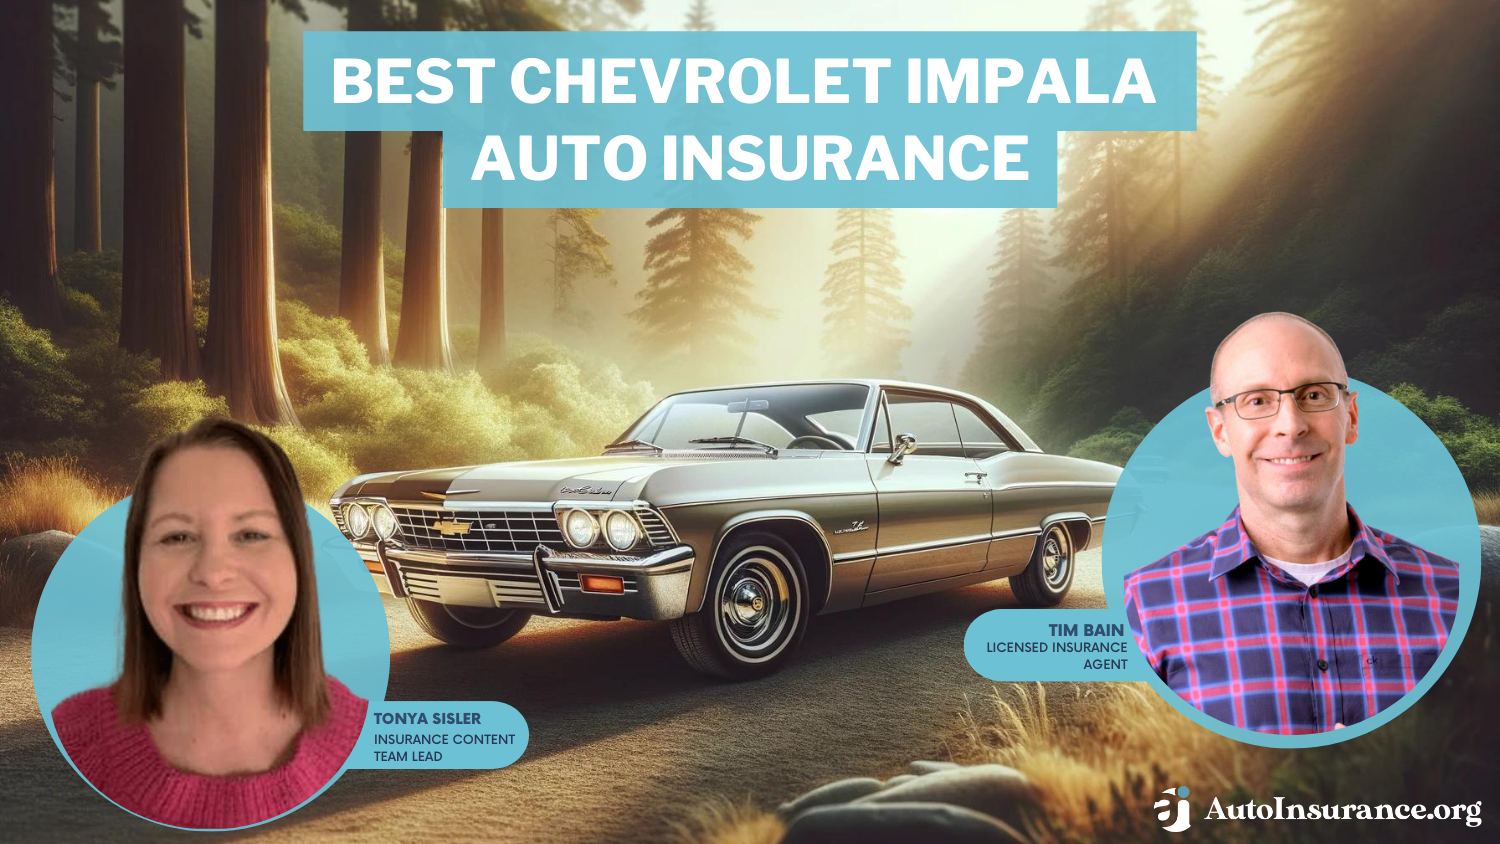 Best Chevrolet Impala Auto Insurance: Travelers, Farmers, The Hartford